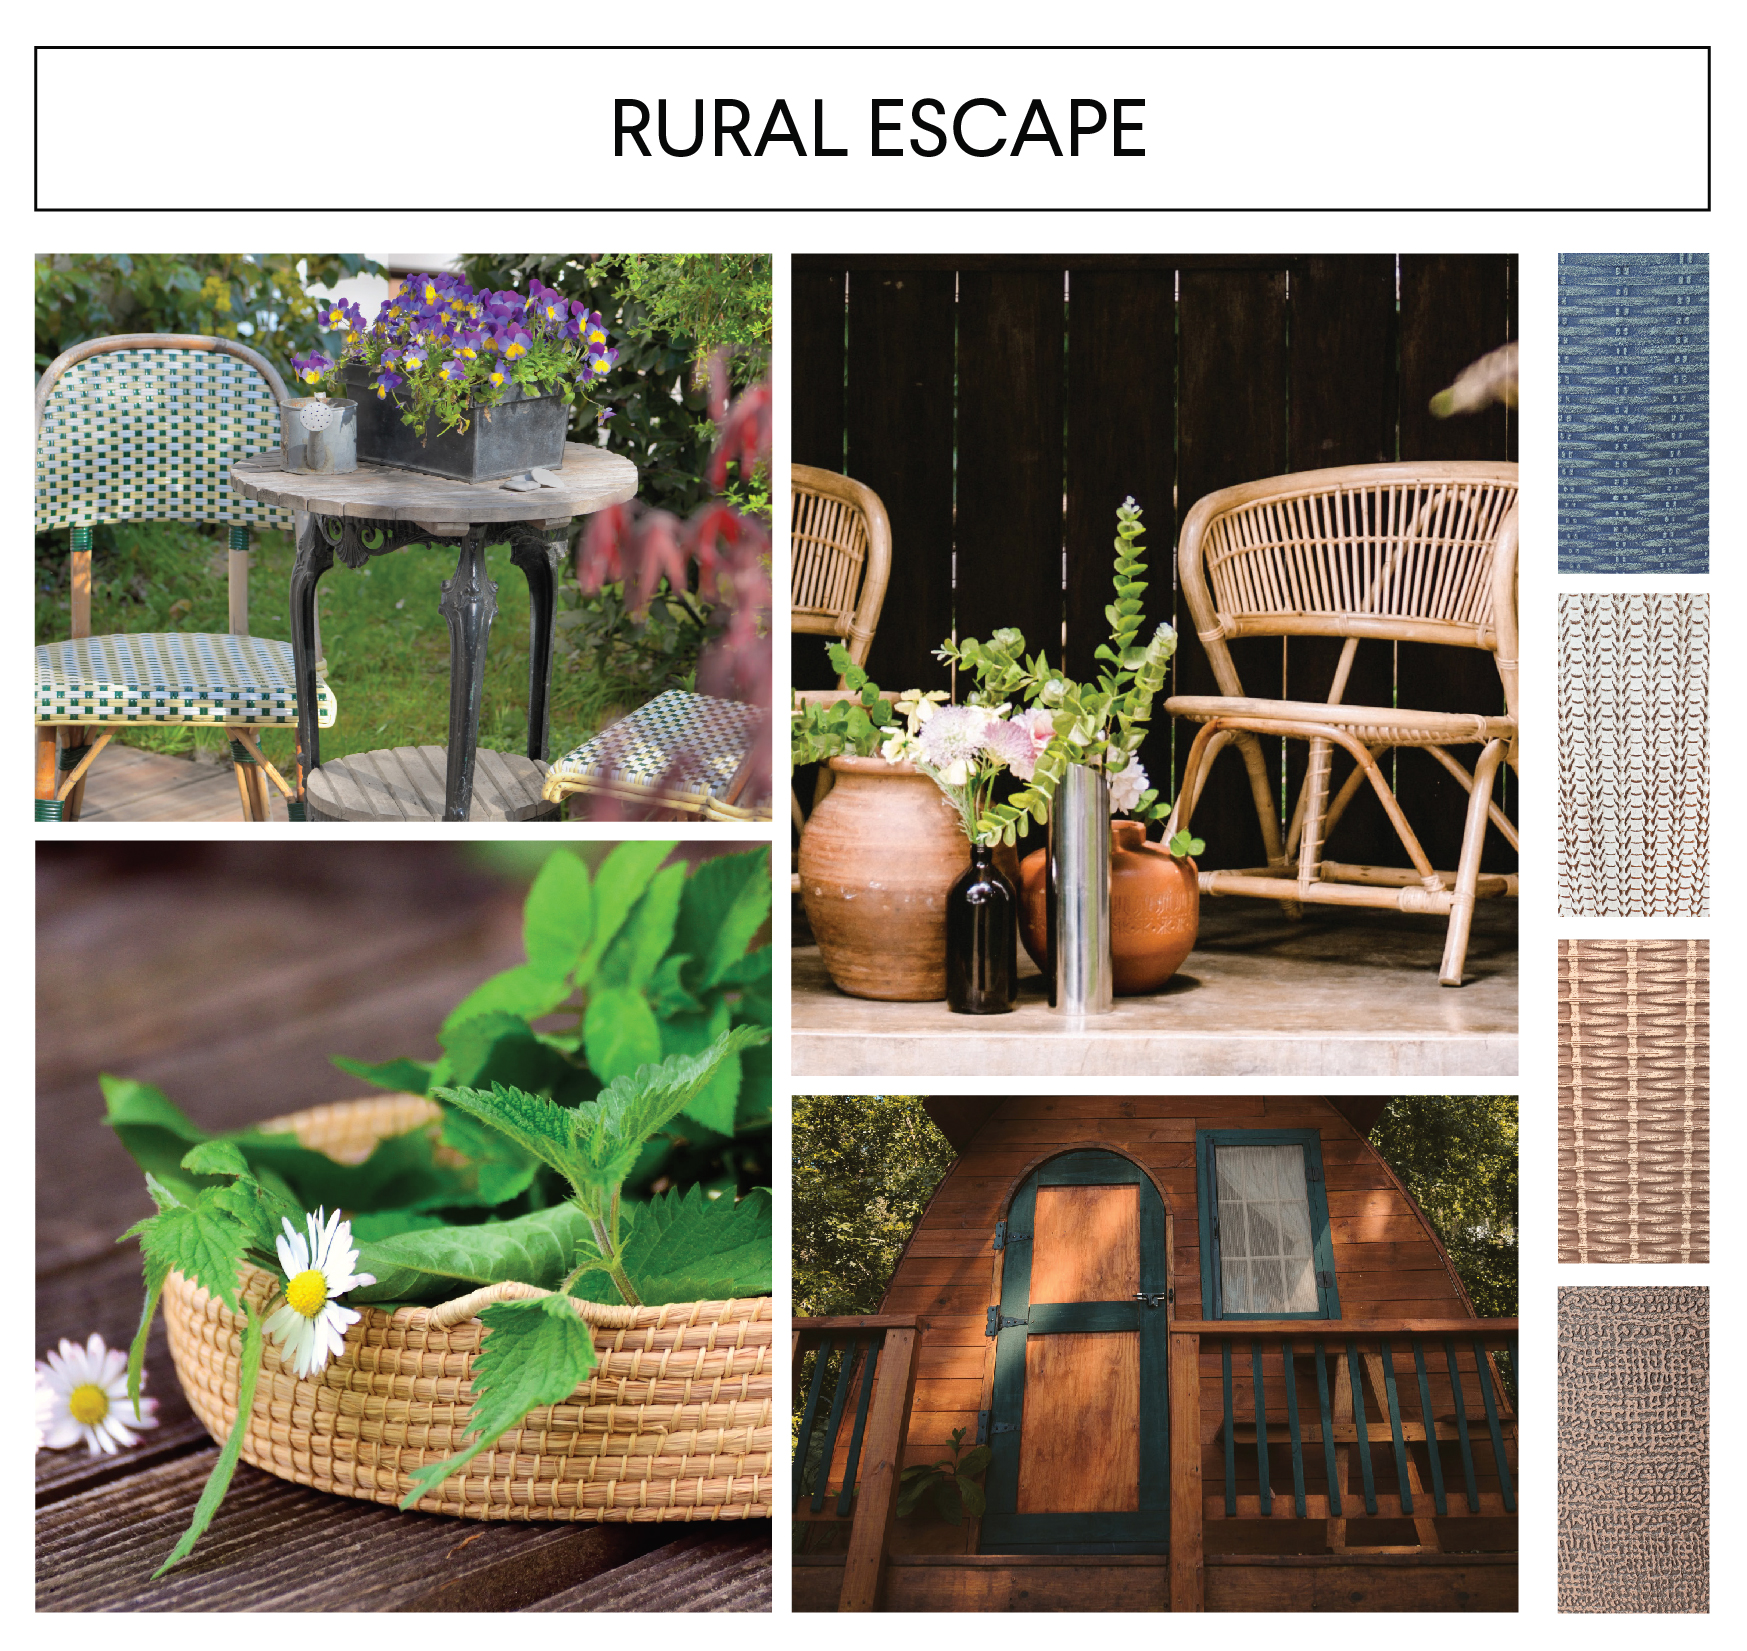 Image of rural escape page